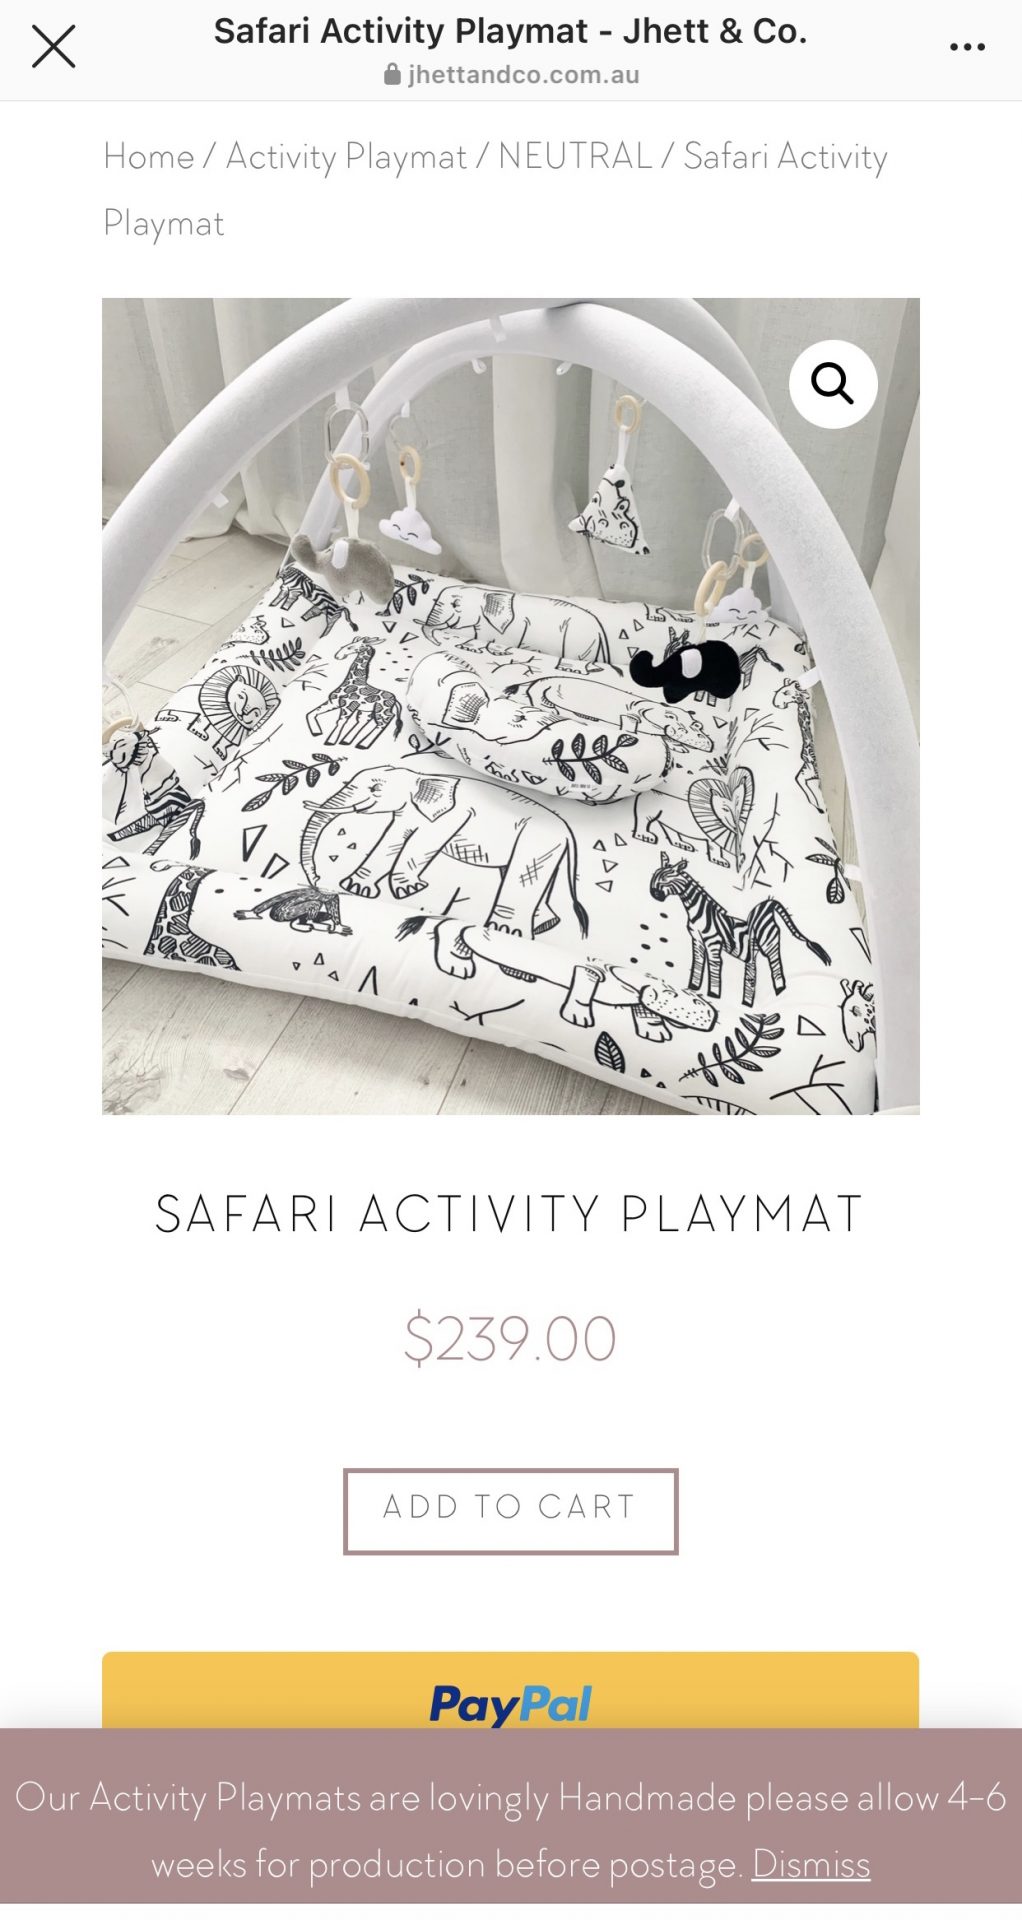 Safari Activity Playmat